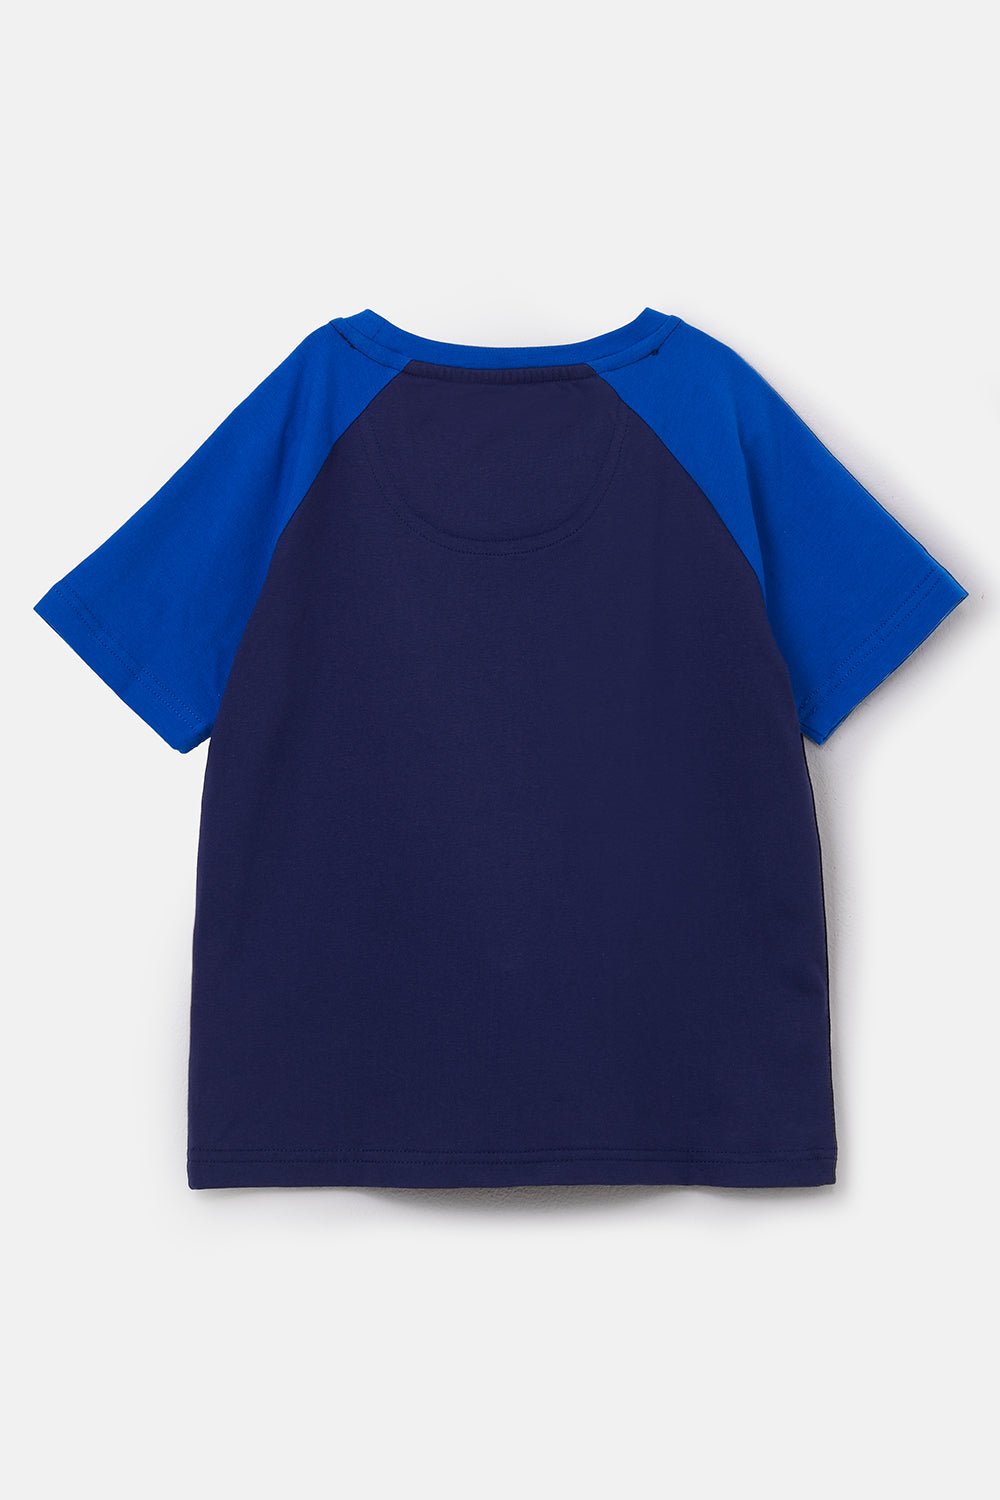 Mason Tee Shirt - Blue Front Loader-Lighthouse